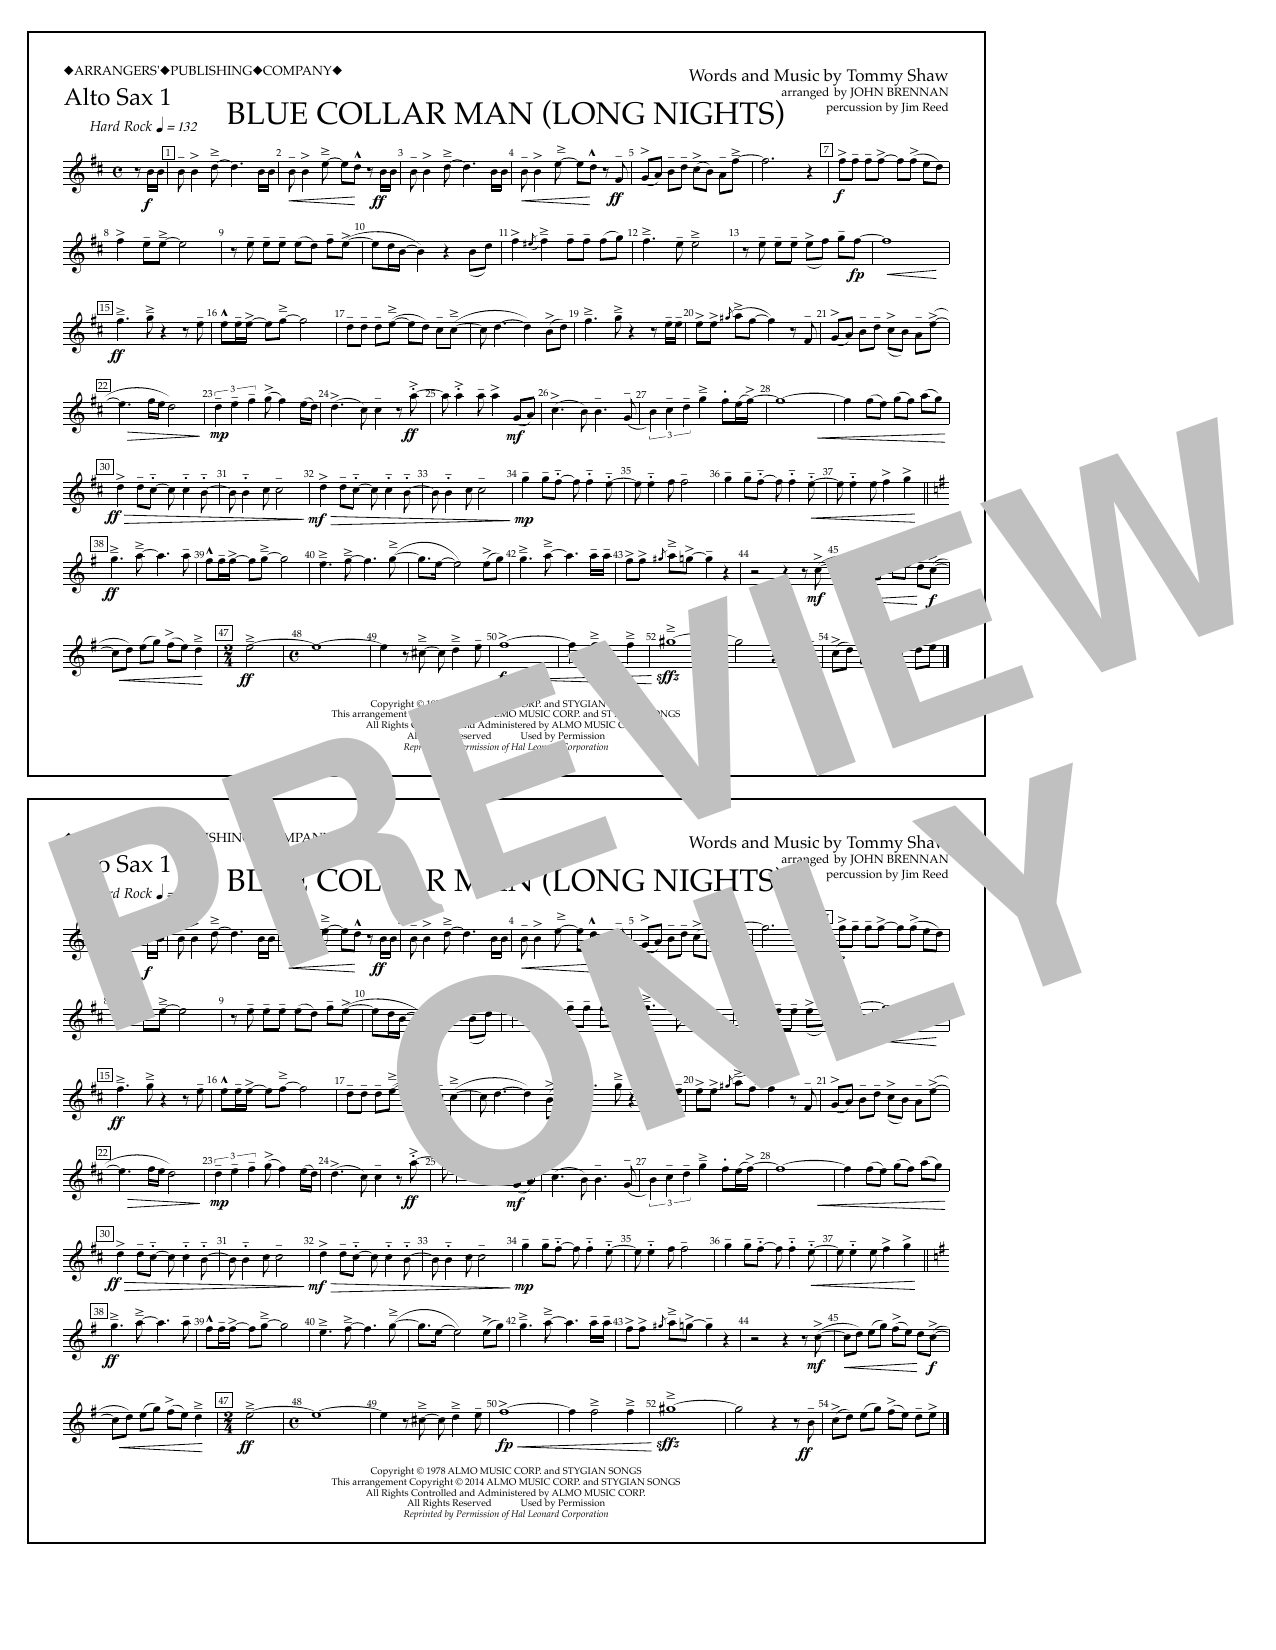 John Brennan Blue Collar Man (Long Nights) - Alto Sax 1 Sheet Music Notes & Chords for Marching Band - Download or Print PDF